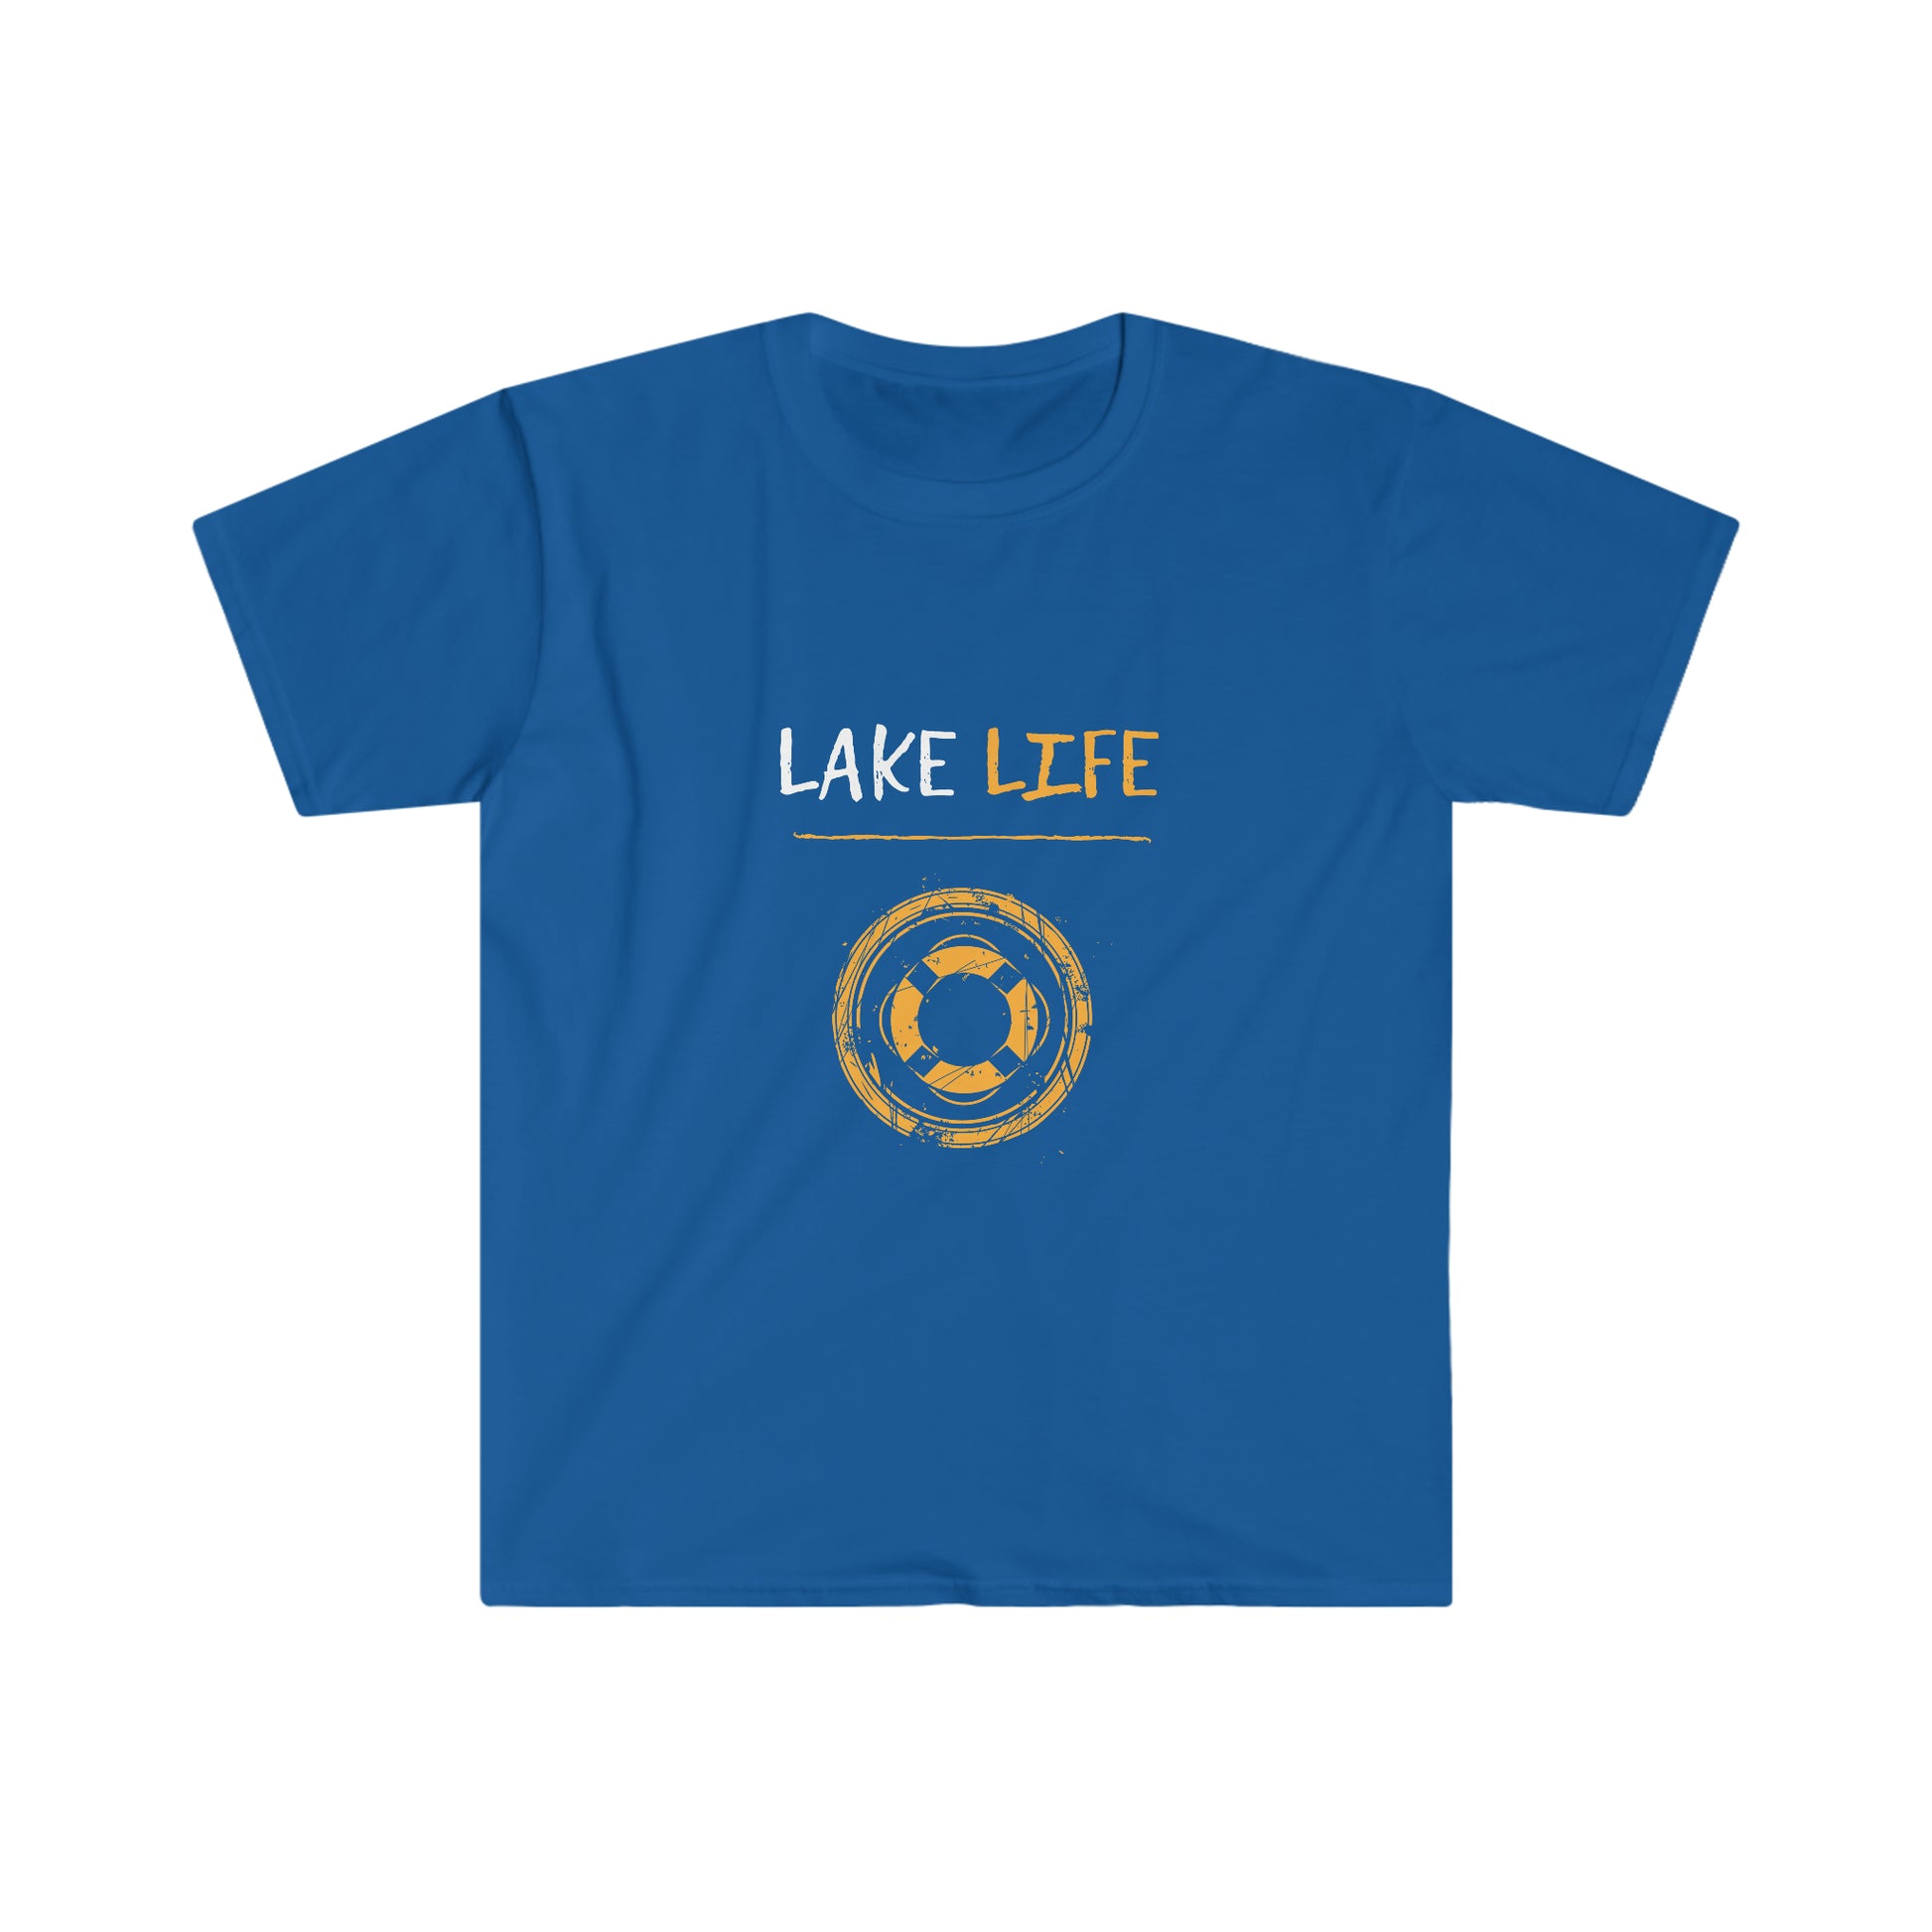 Lake Life - Lifeboat - Urban Camper